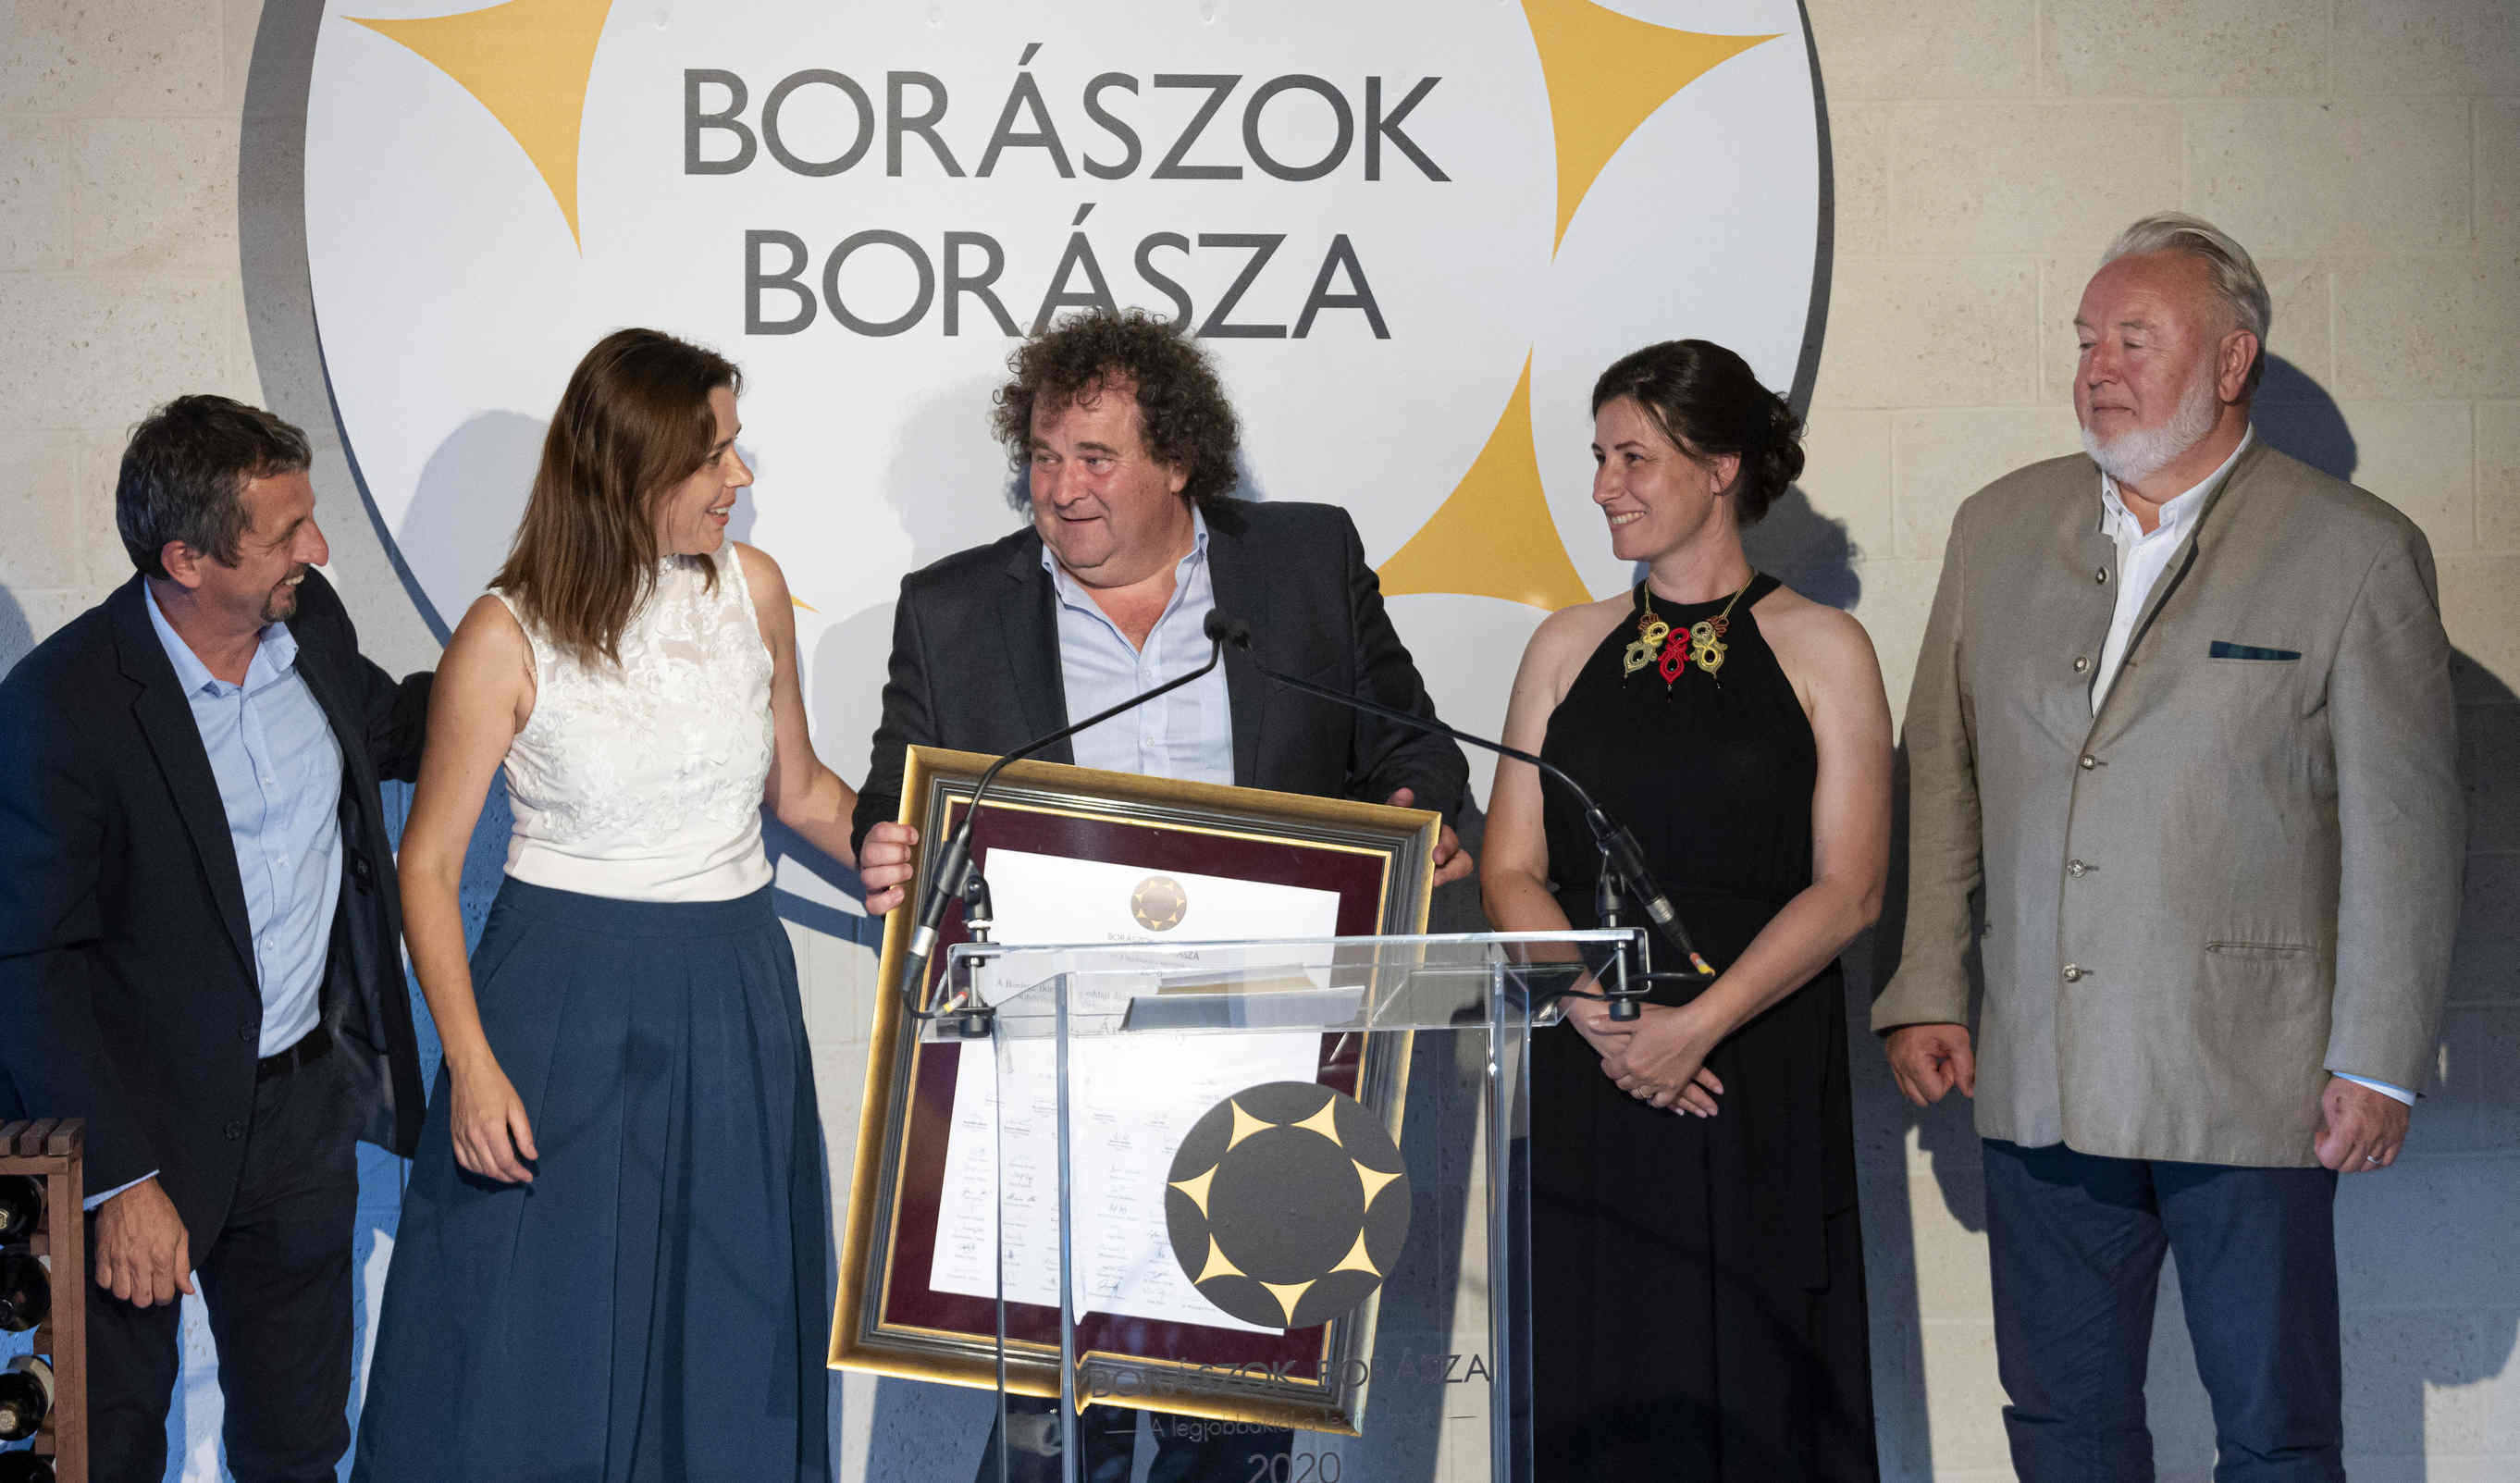 Borászok-borásza-2020-صانع النبيذ-المجر-top5